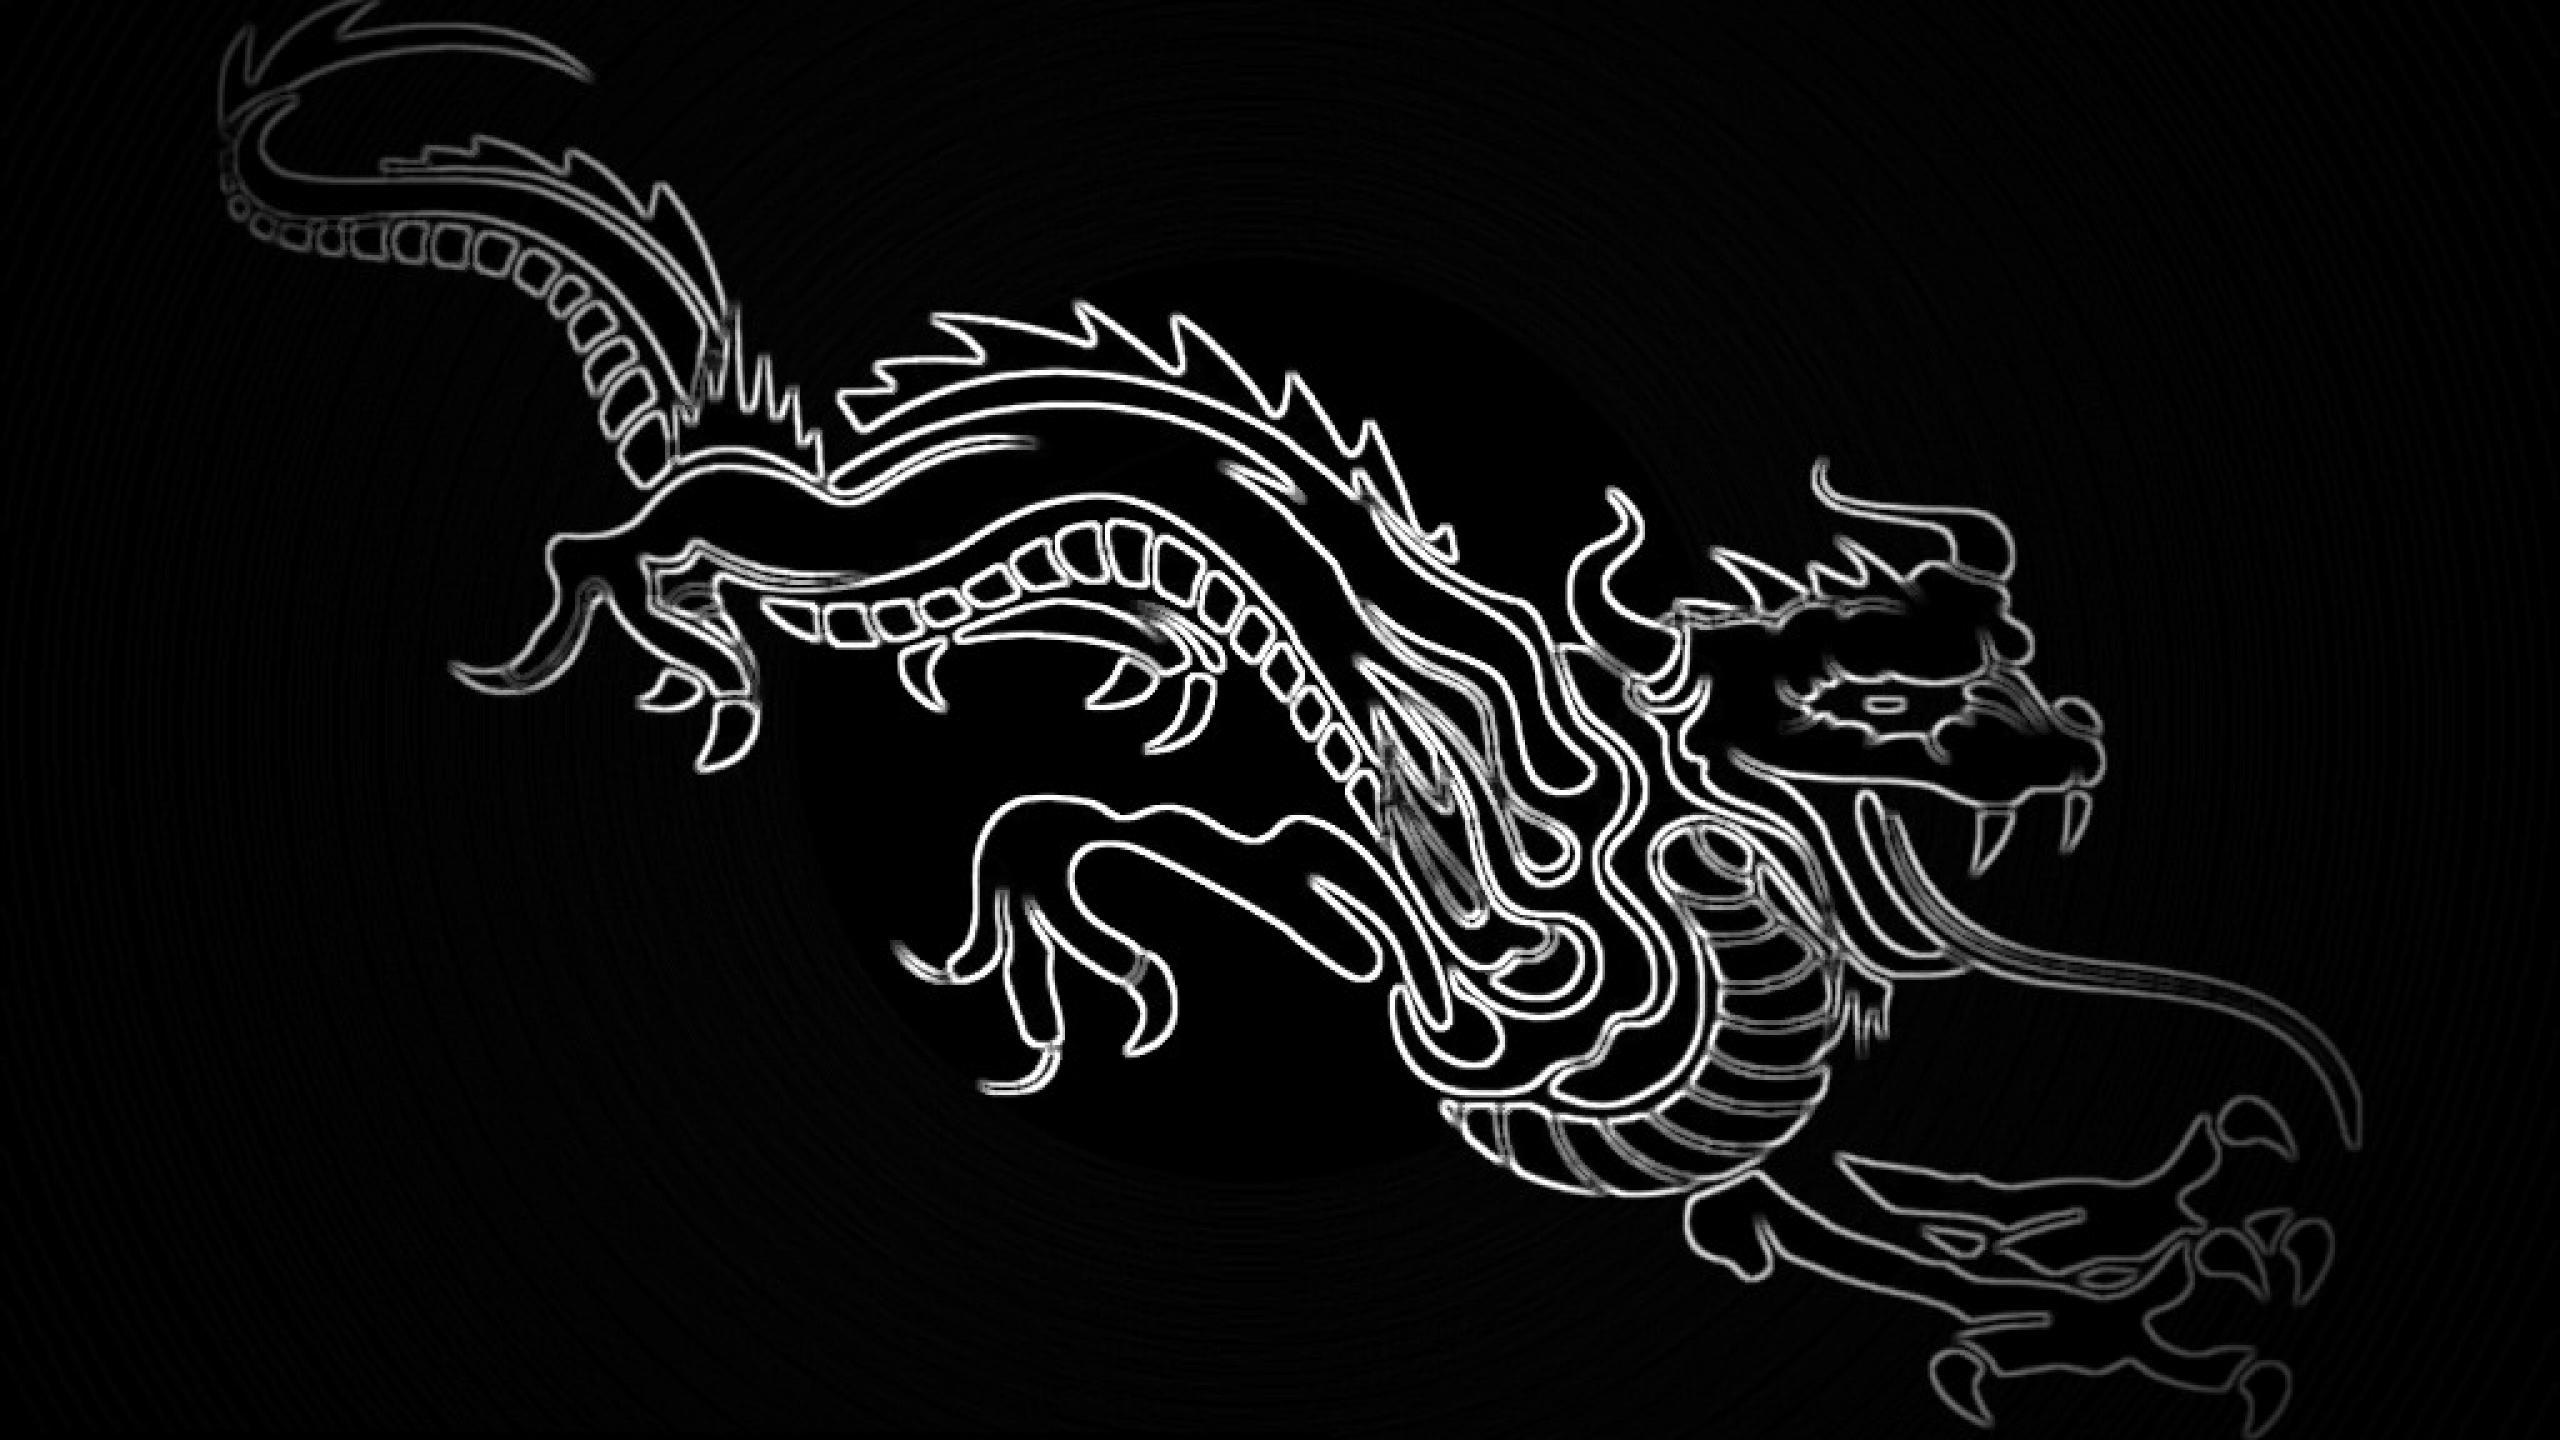 Ubuntu Dragon Wallpaper